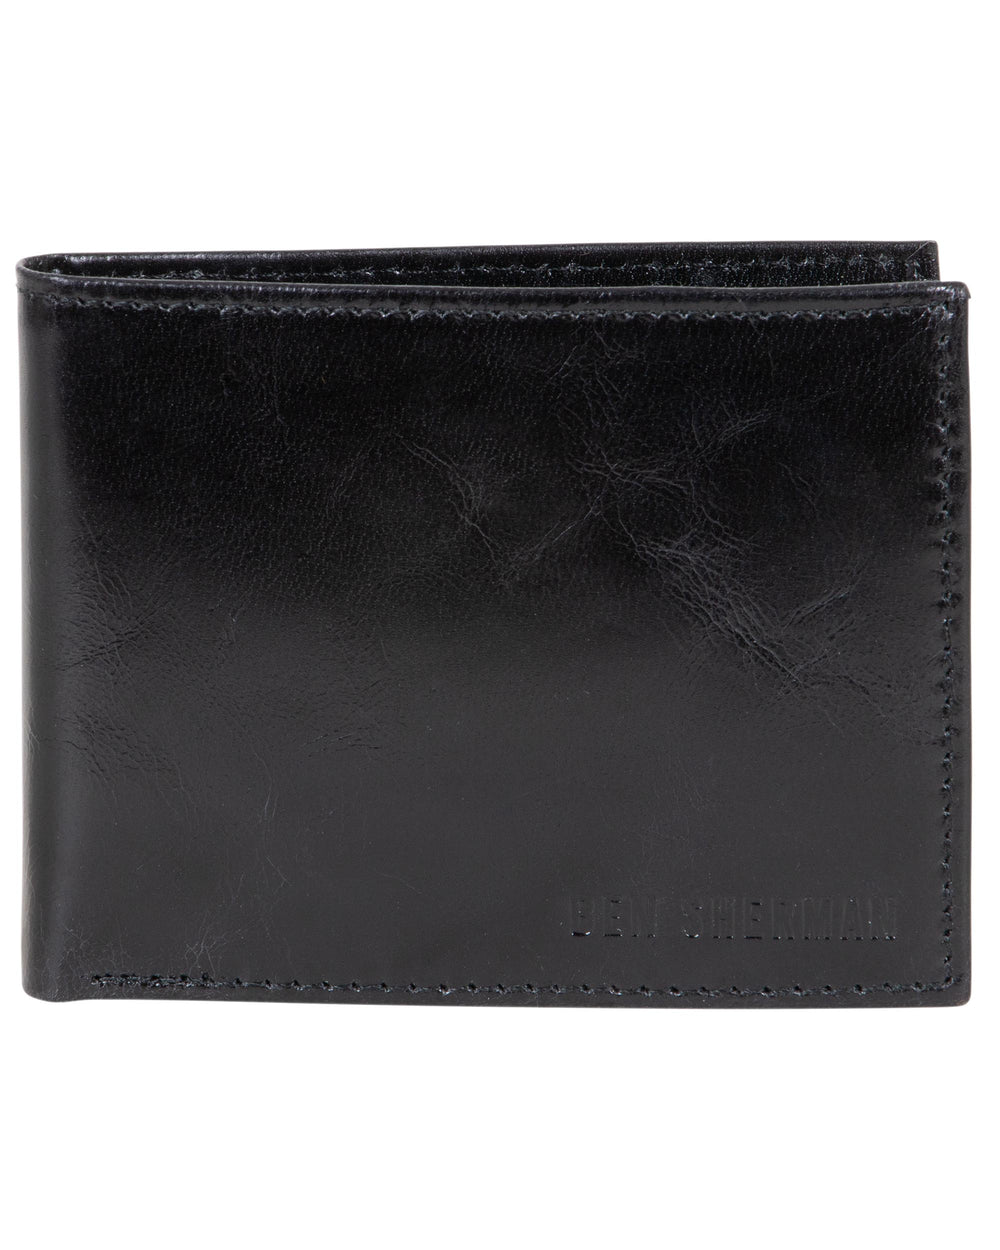 Romford Leather Billfold Wallet - Black